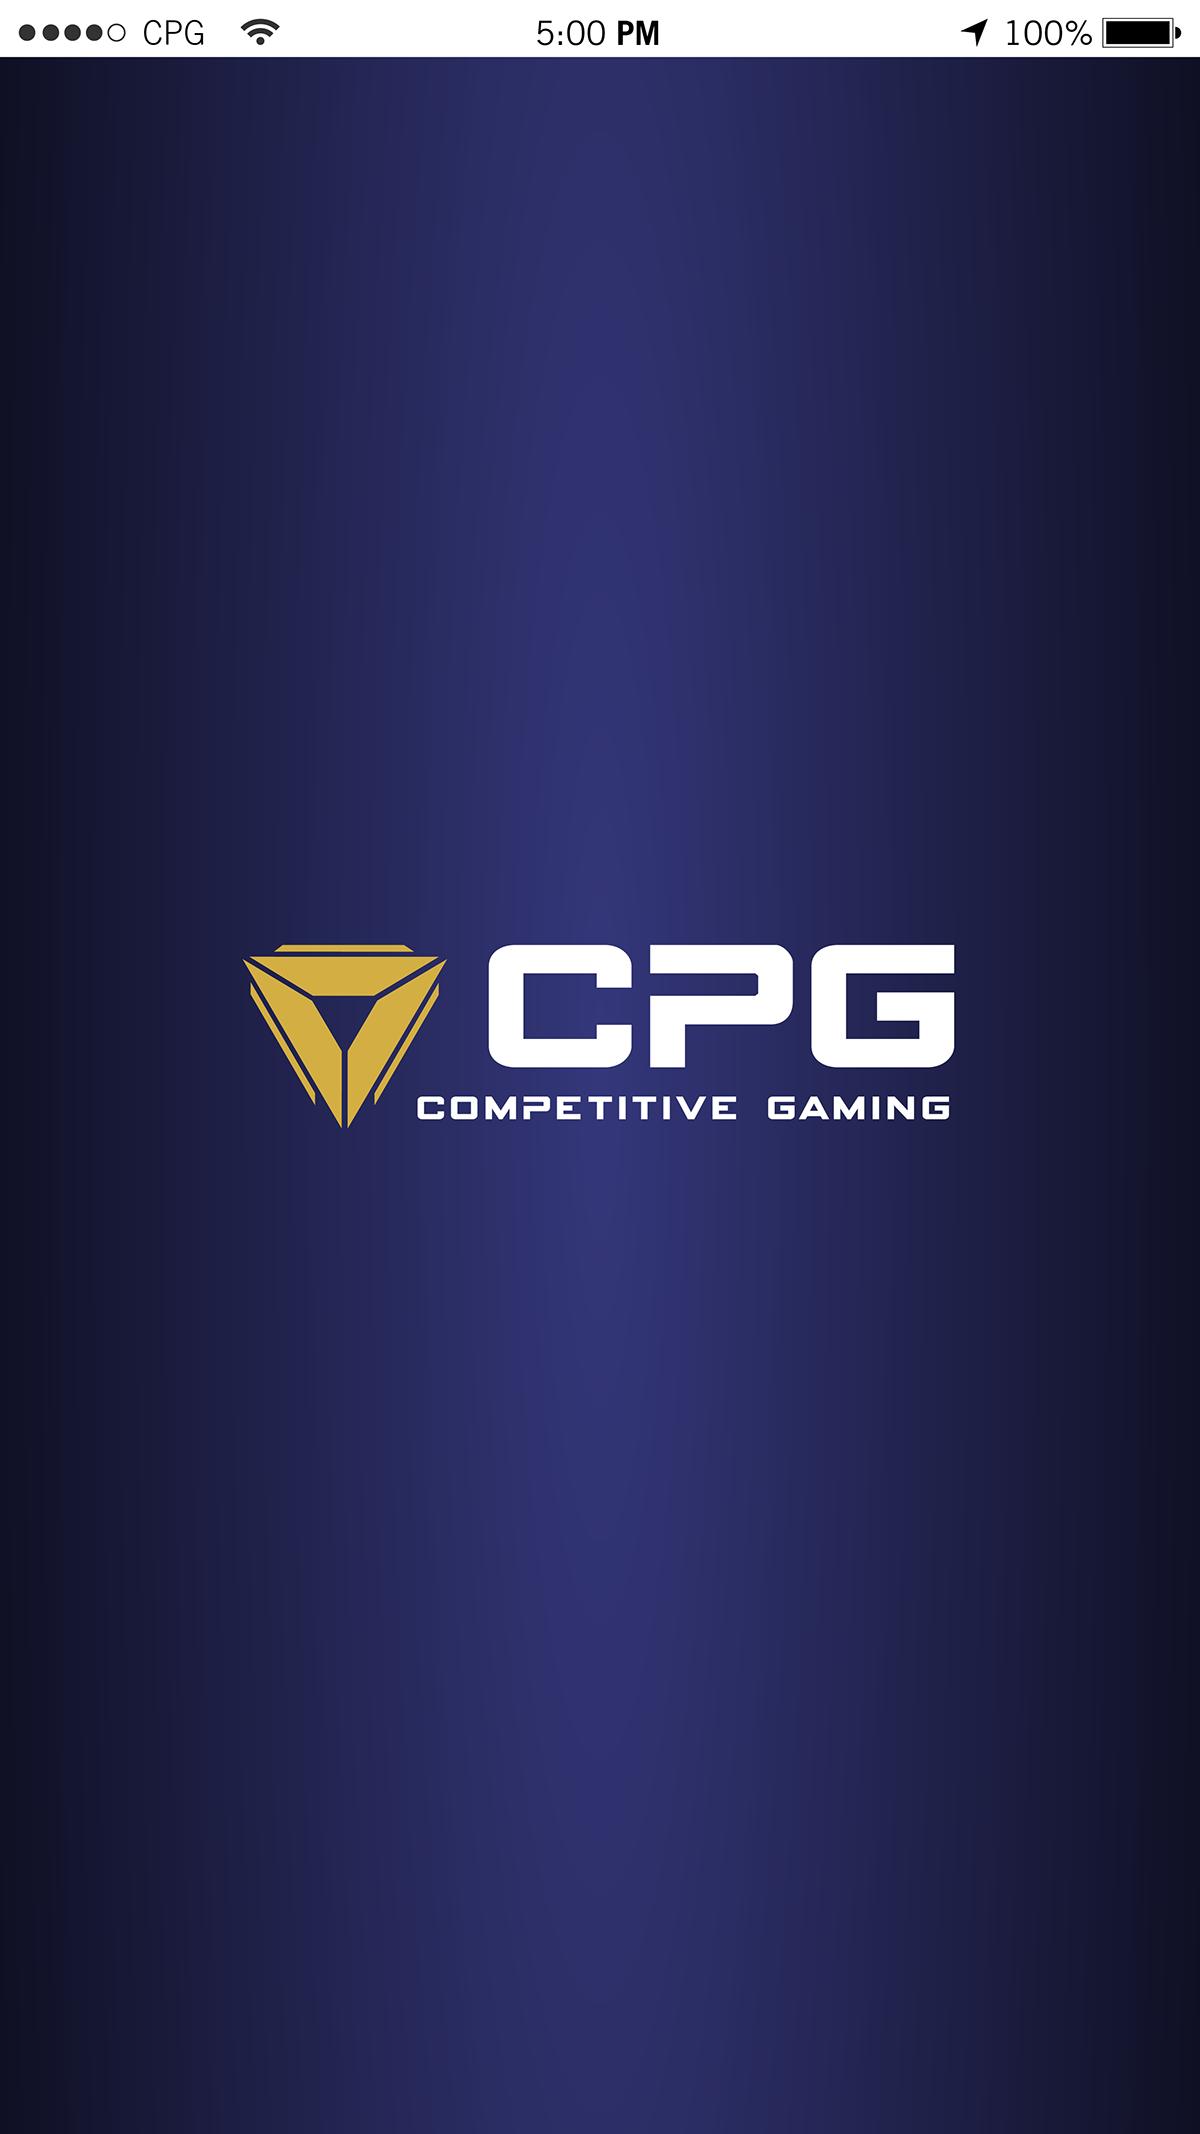 competitive gaming  cpg MLG UMG Gaming logo app gamebattles fullsail DADBS design optic call of duty Halo csgo